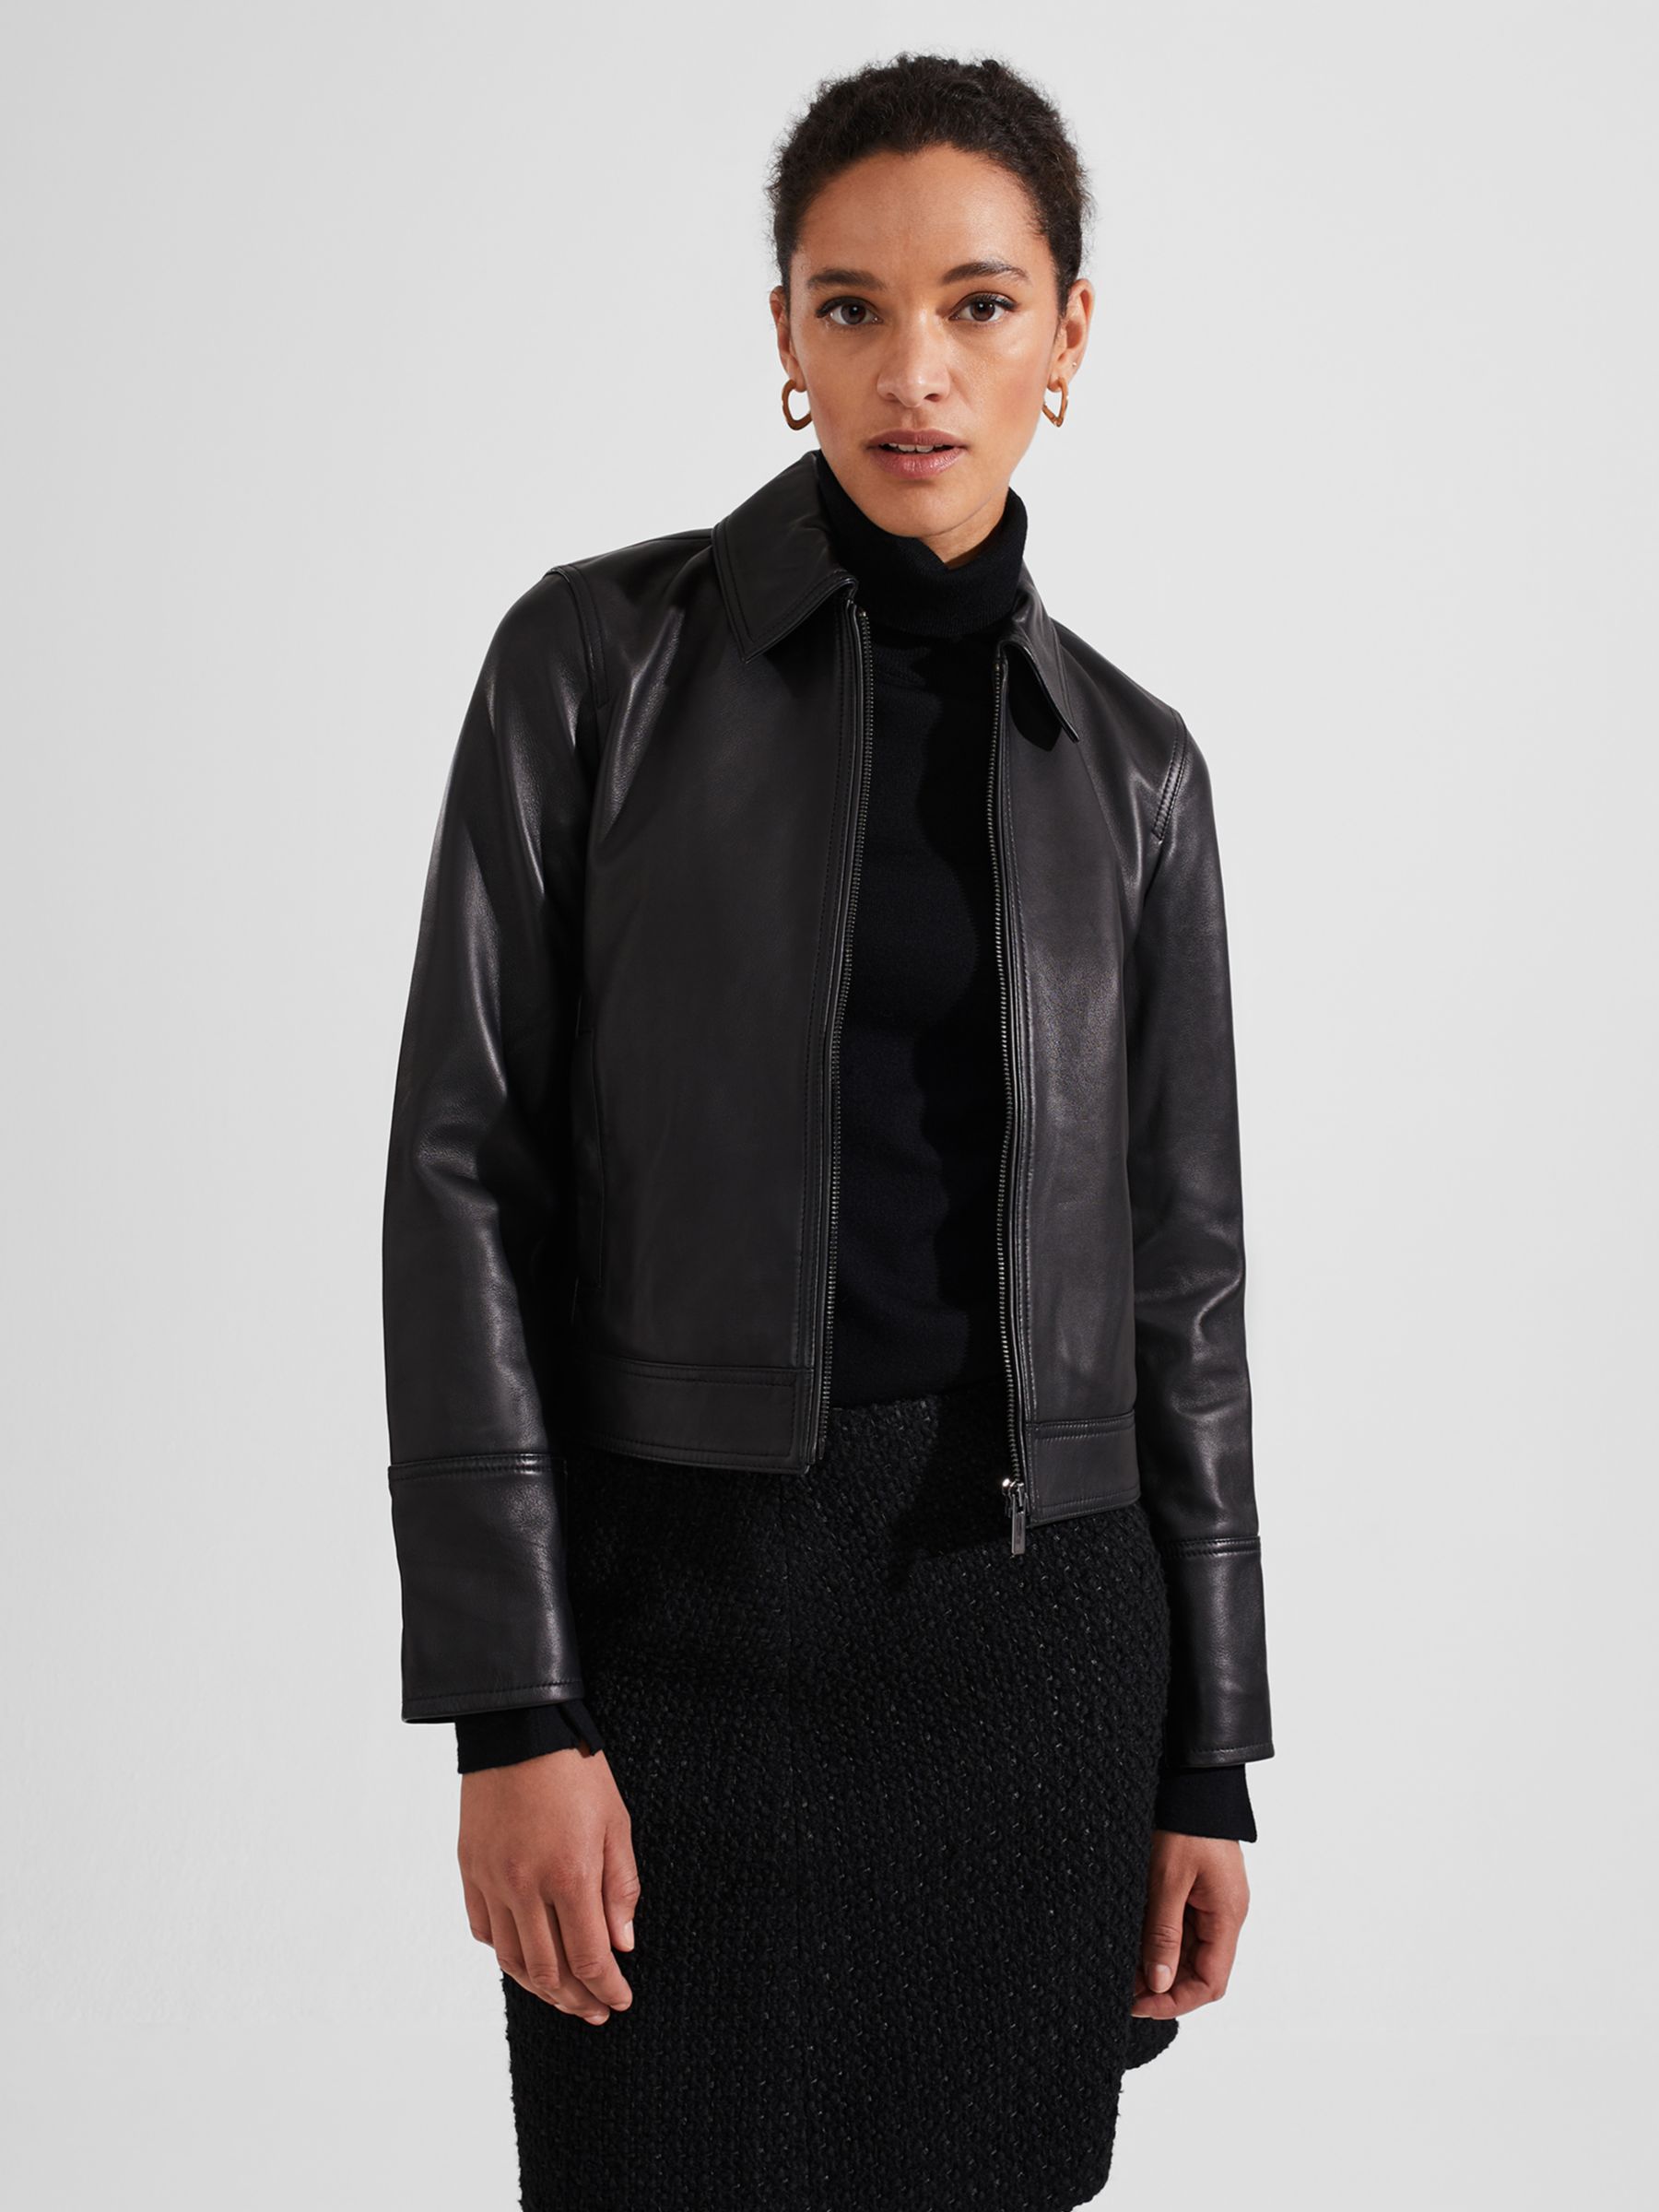 Jean Jacket with Black Dress - Penny Pincher Fashion